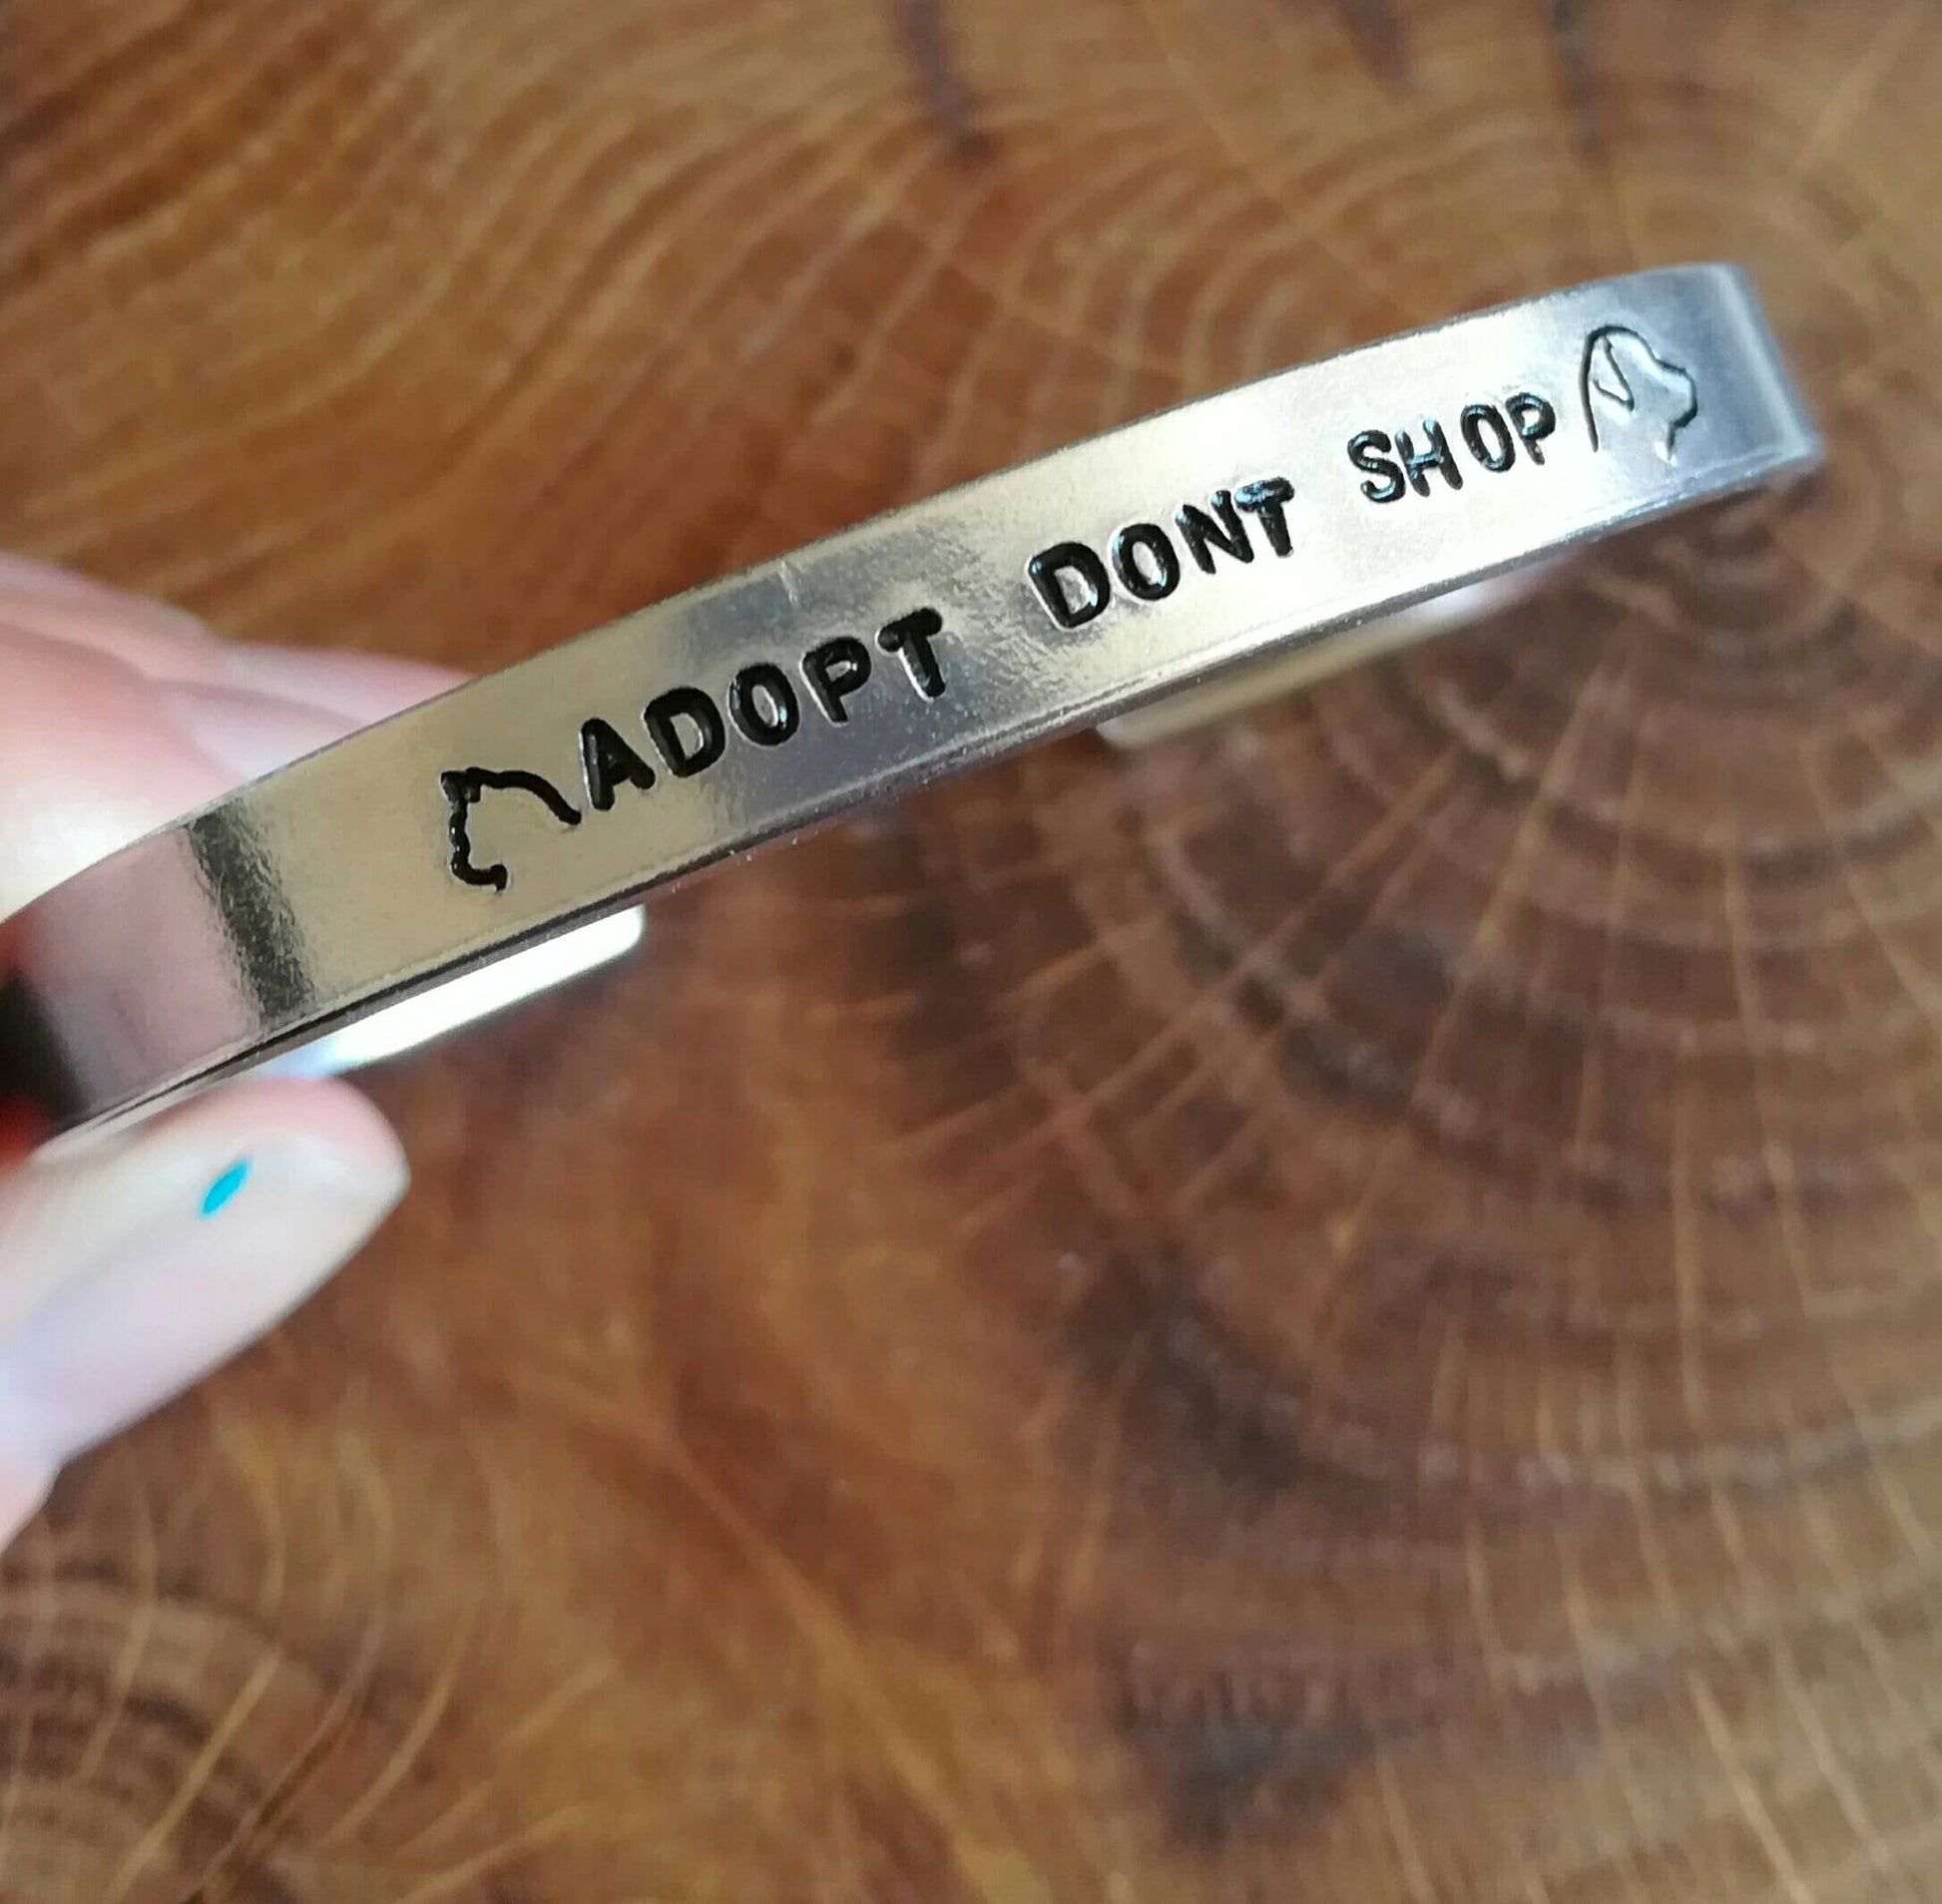 Adopt don't shop handmade vegan bracelet